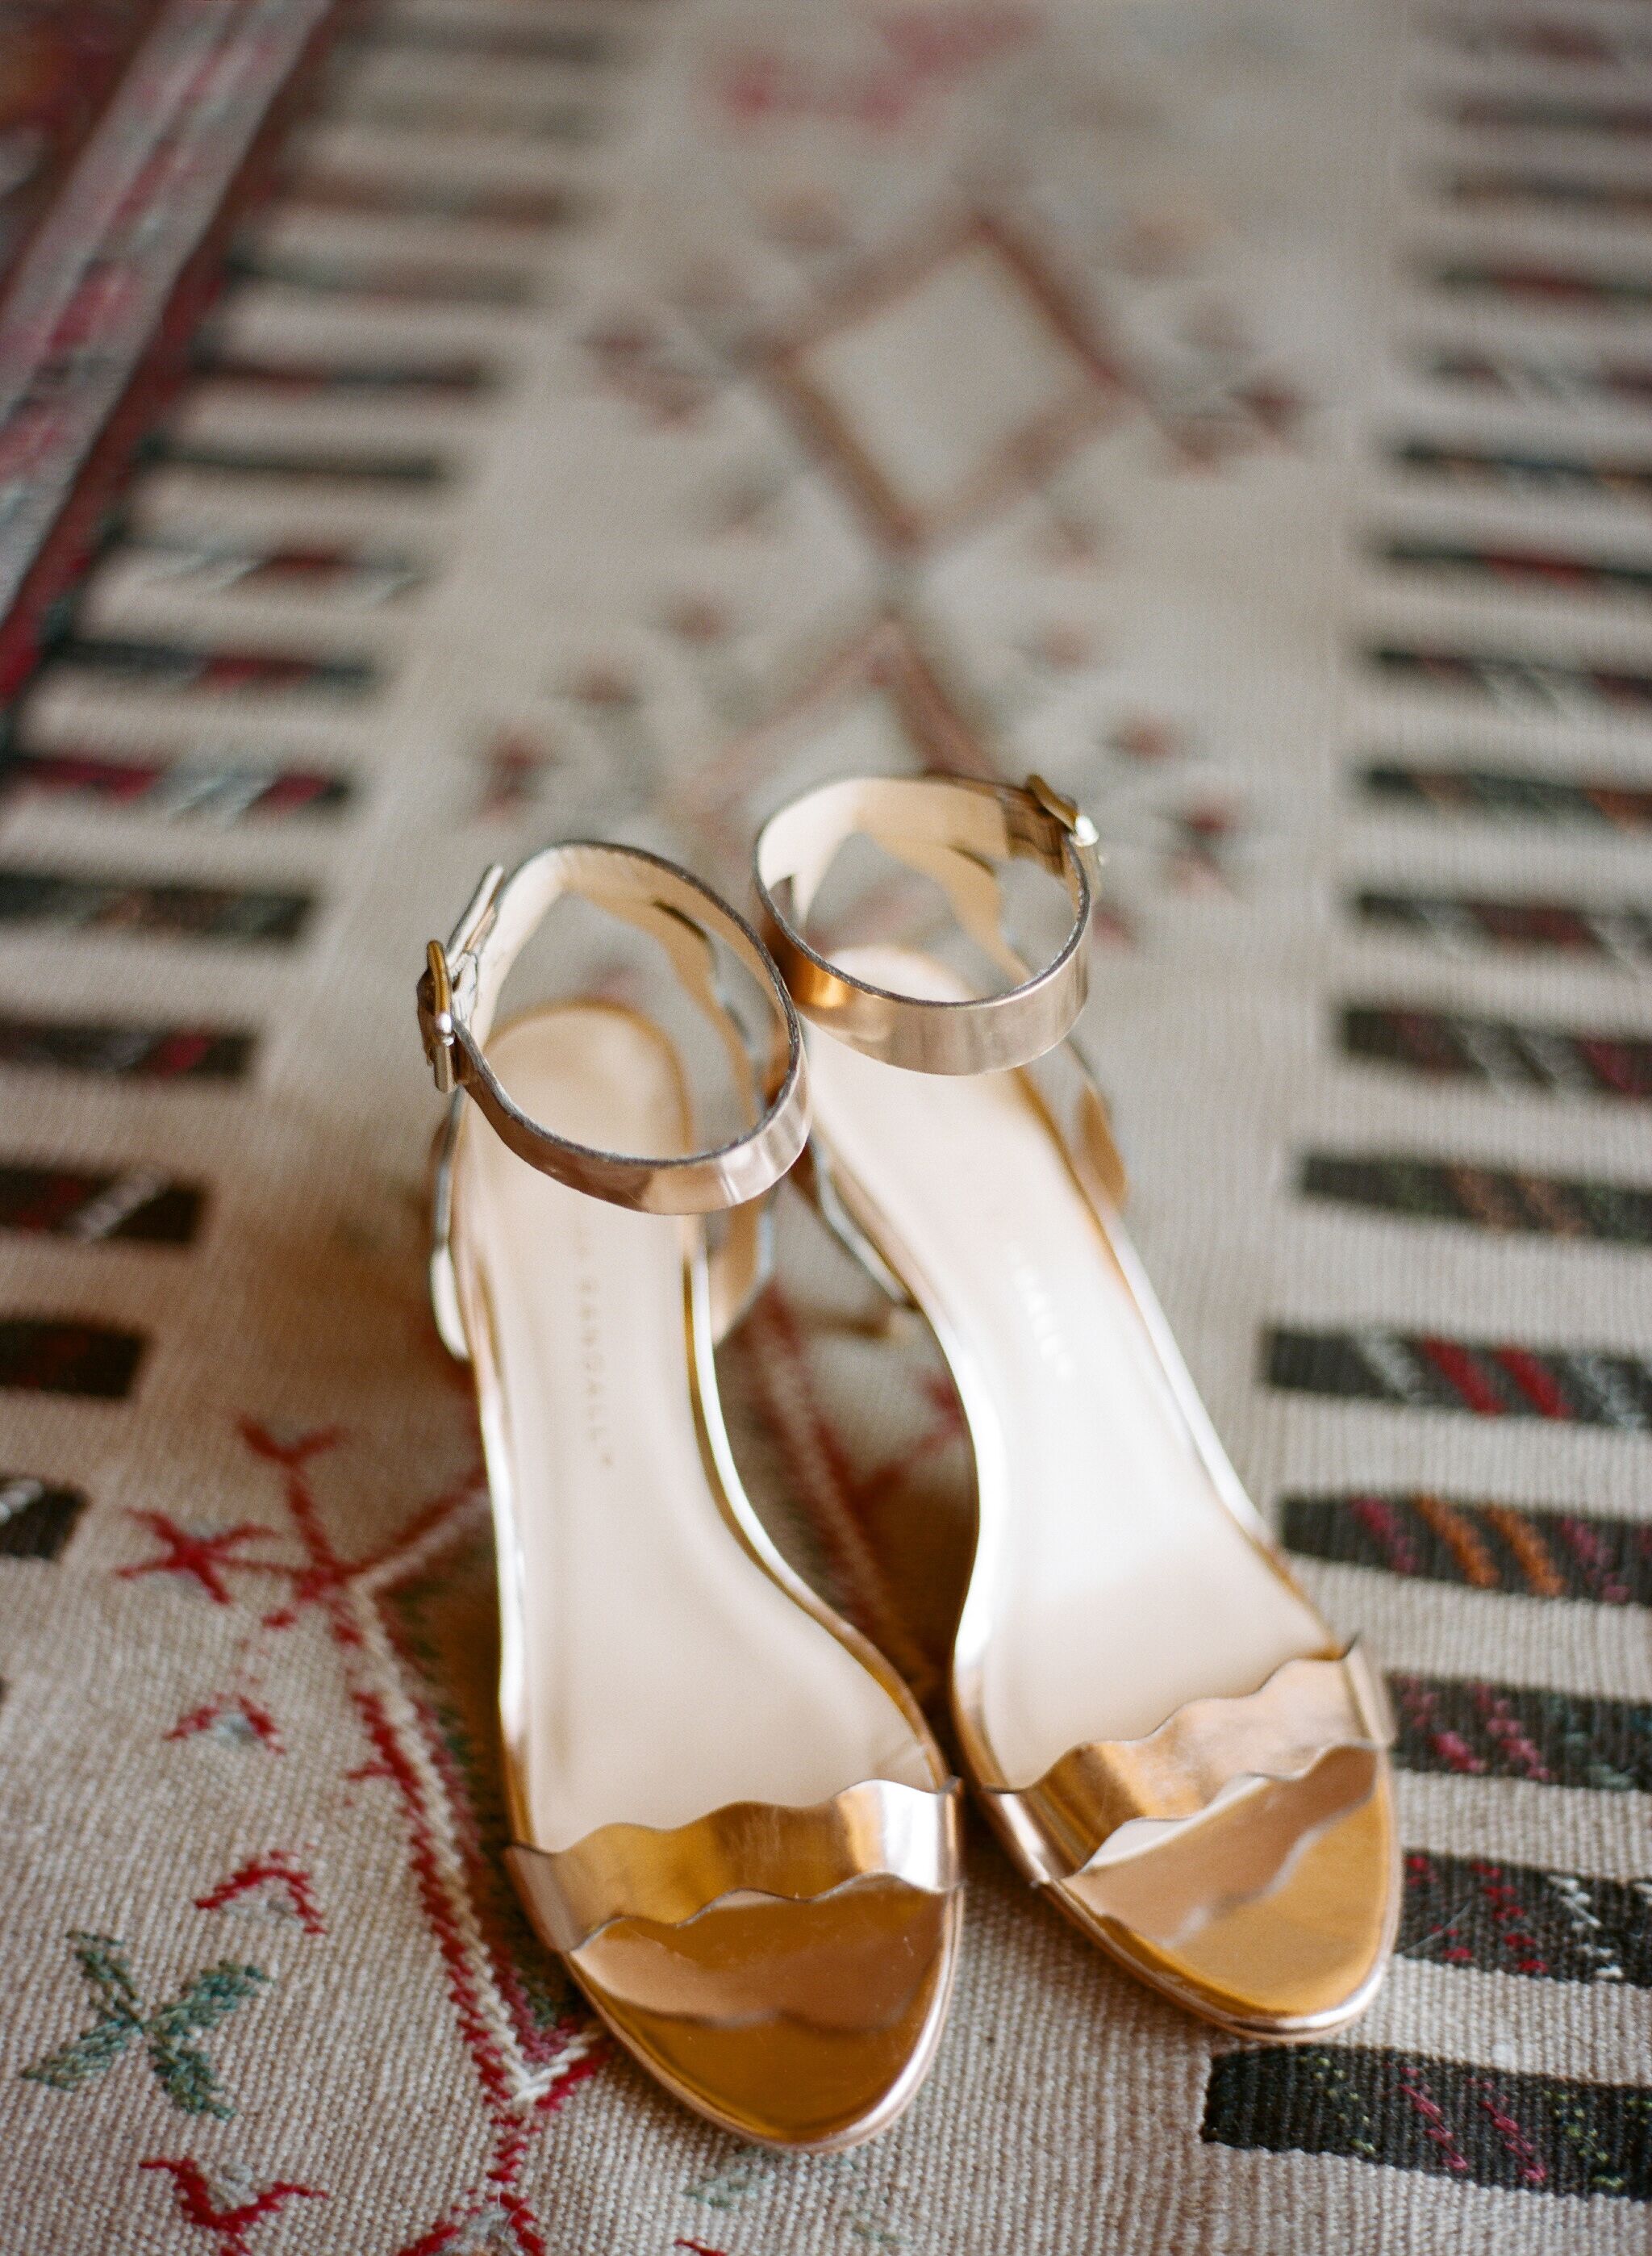 loeffler randall rose gold sandals